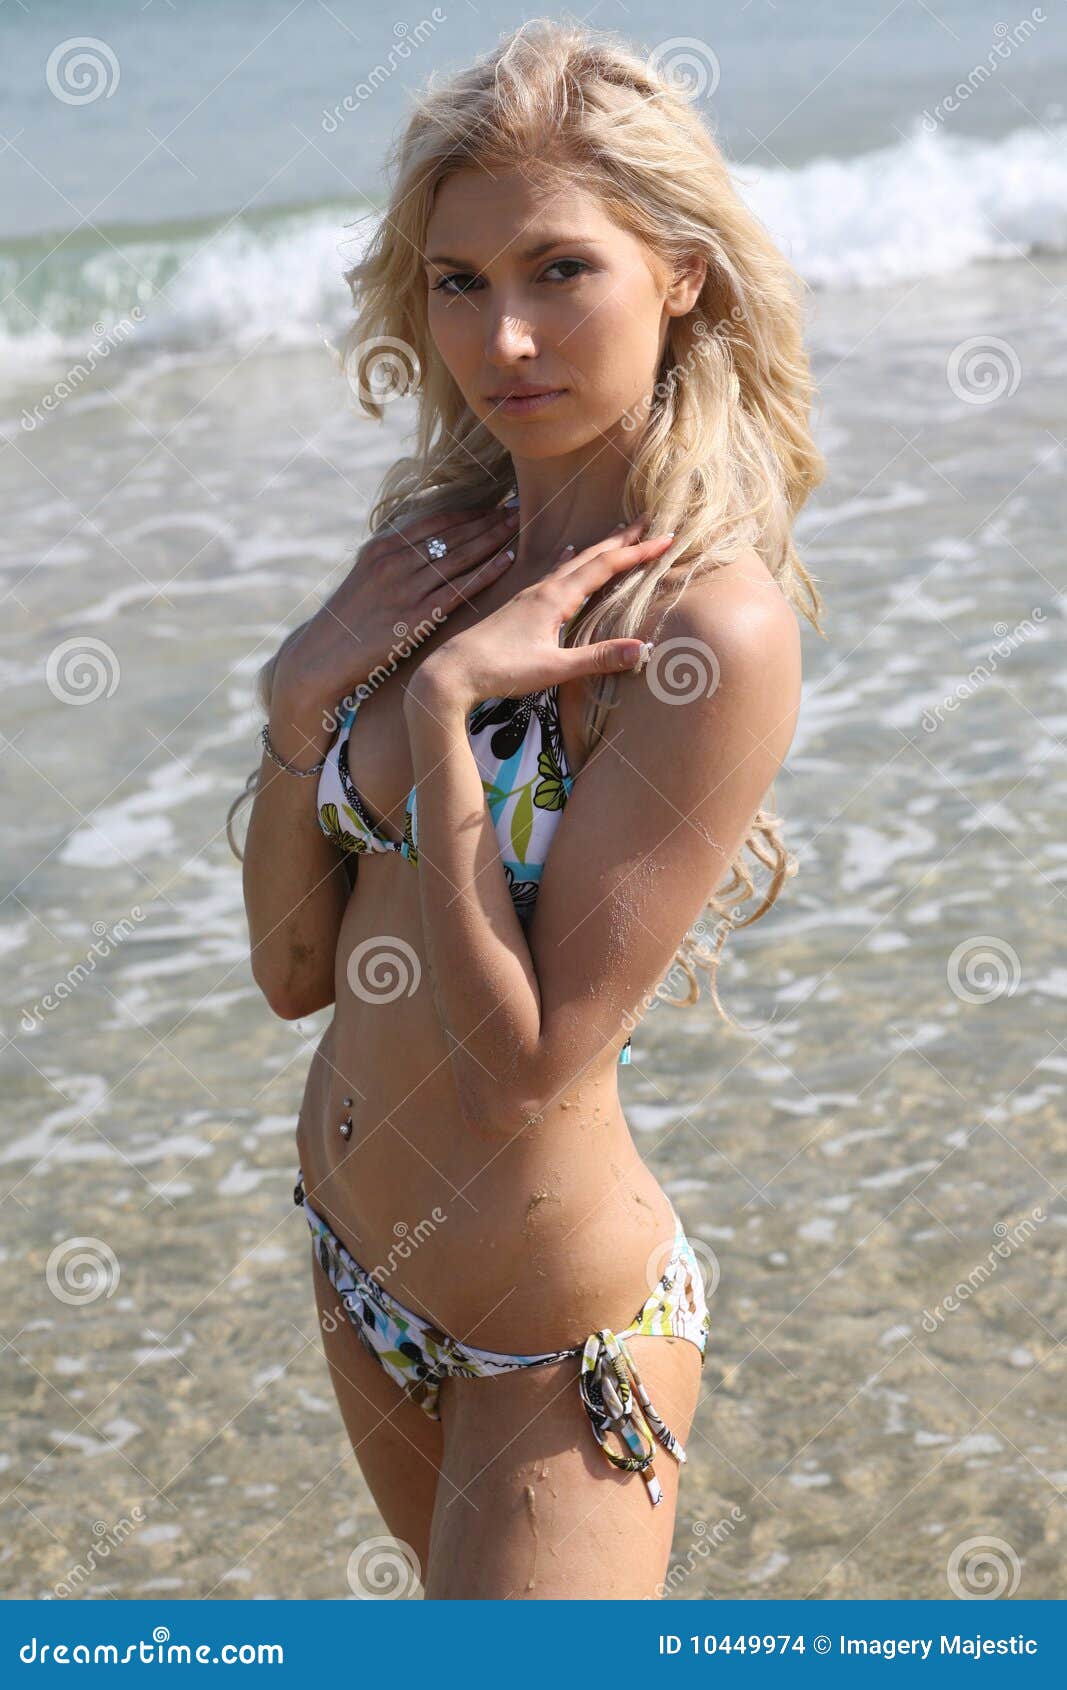 Lady in bikini stock photo. Image of caucasian, paradise - 10449974